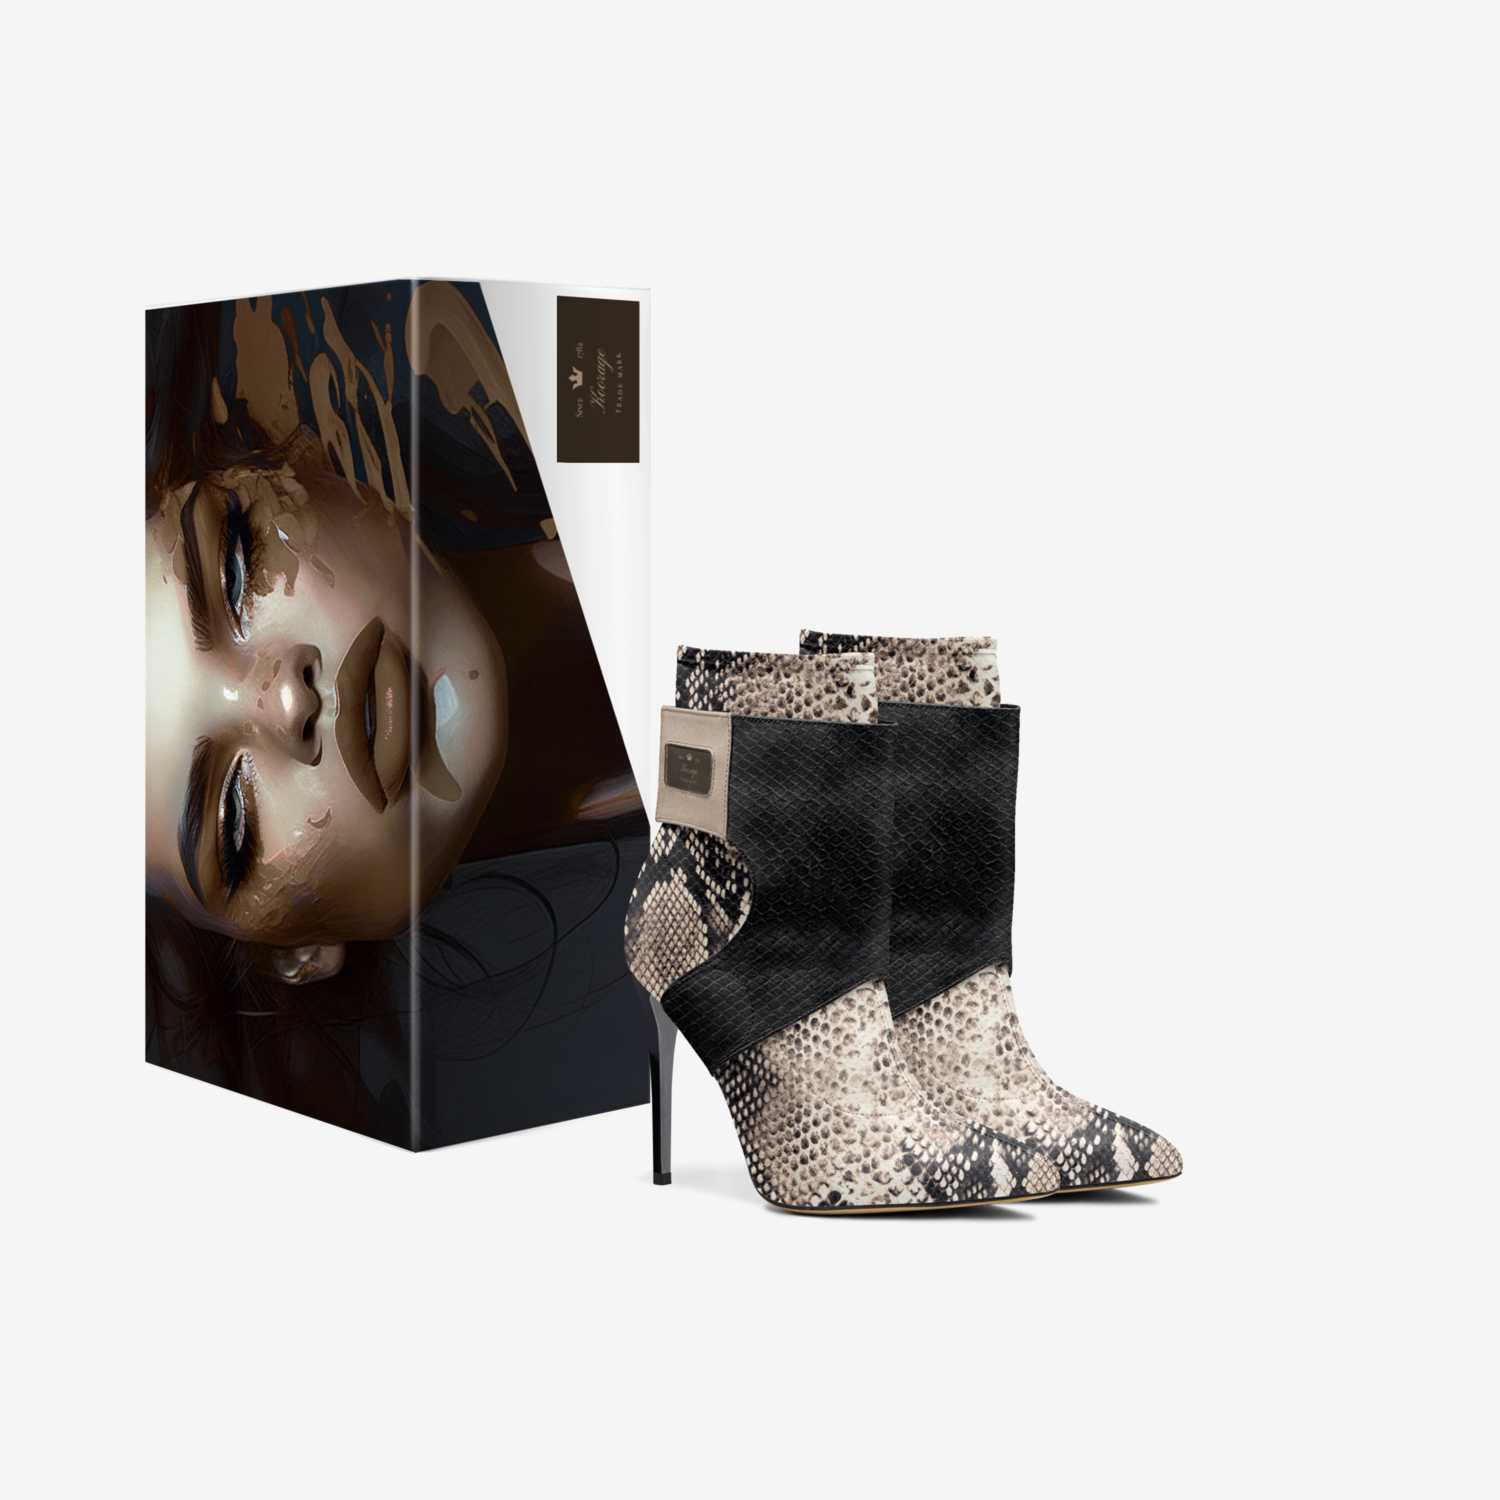 Koorage custom made in Italy shoes by Maïa Koorshen | Box view